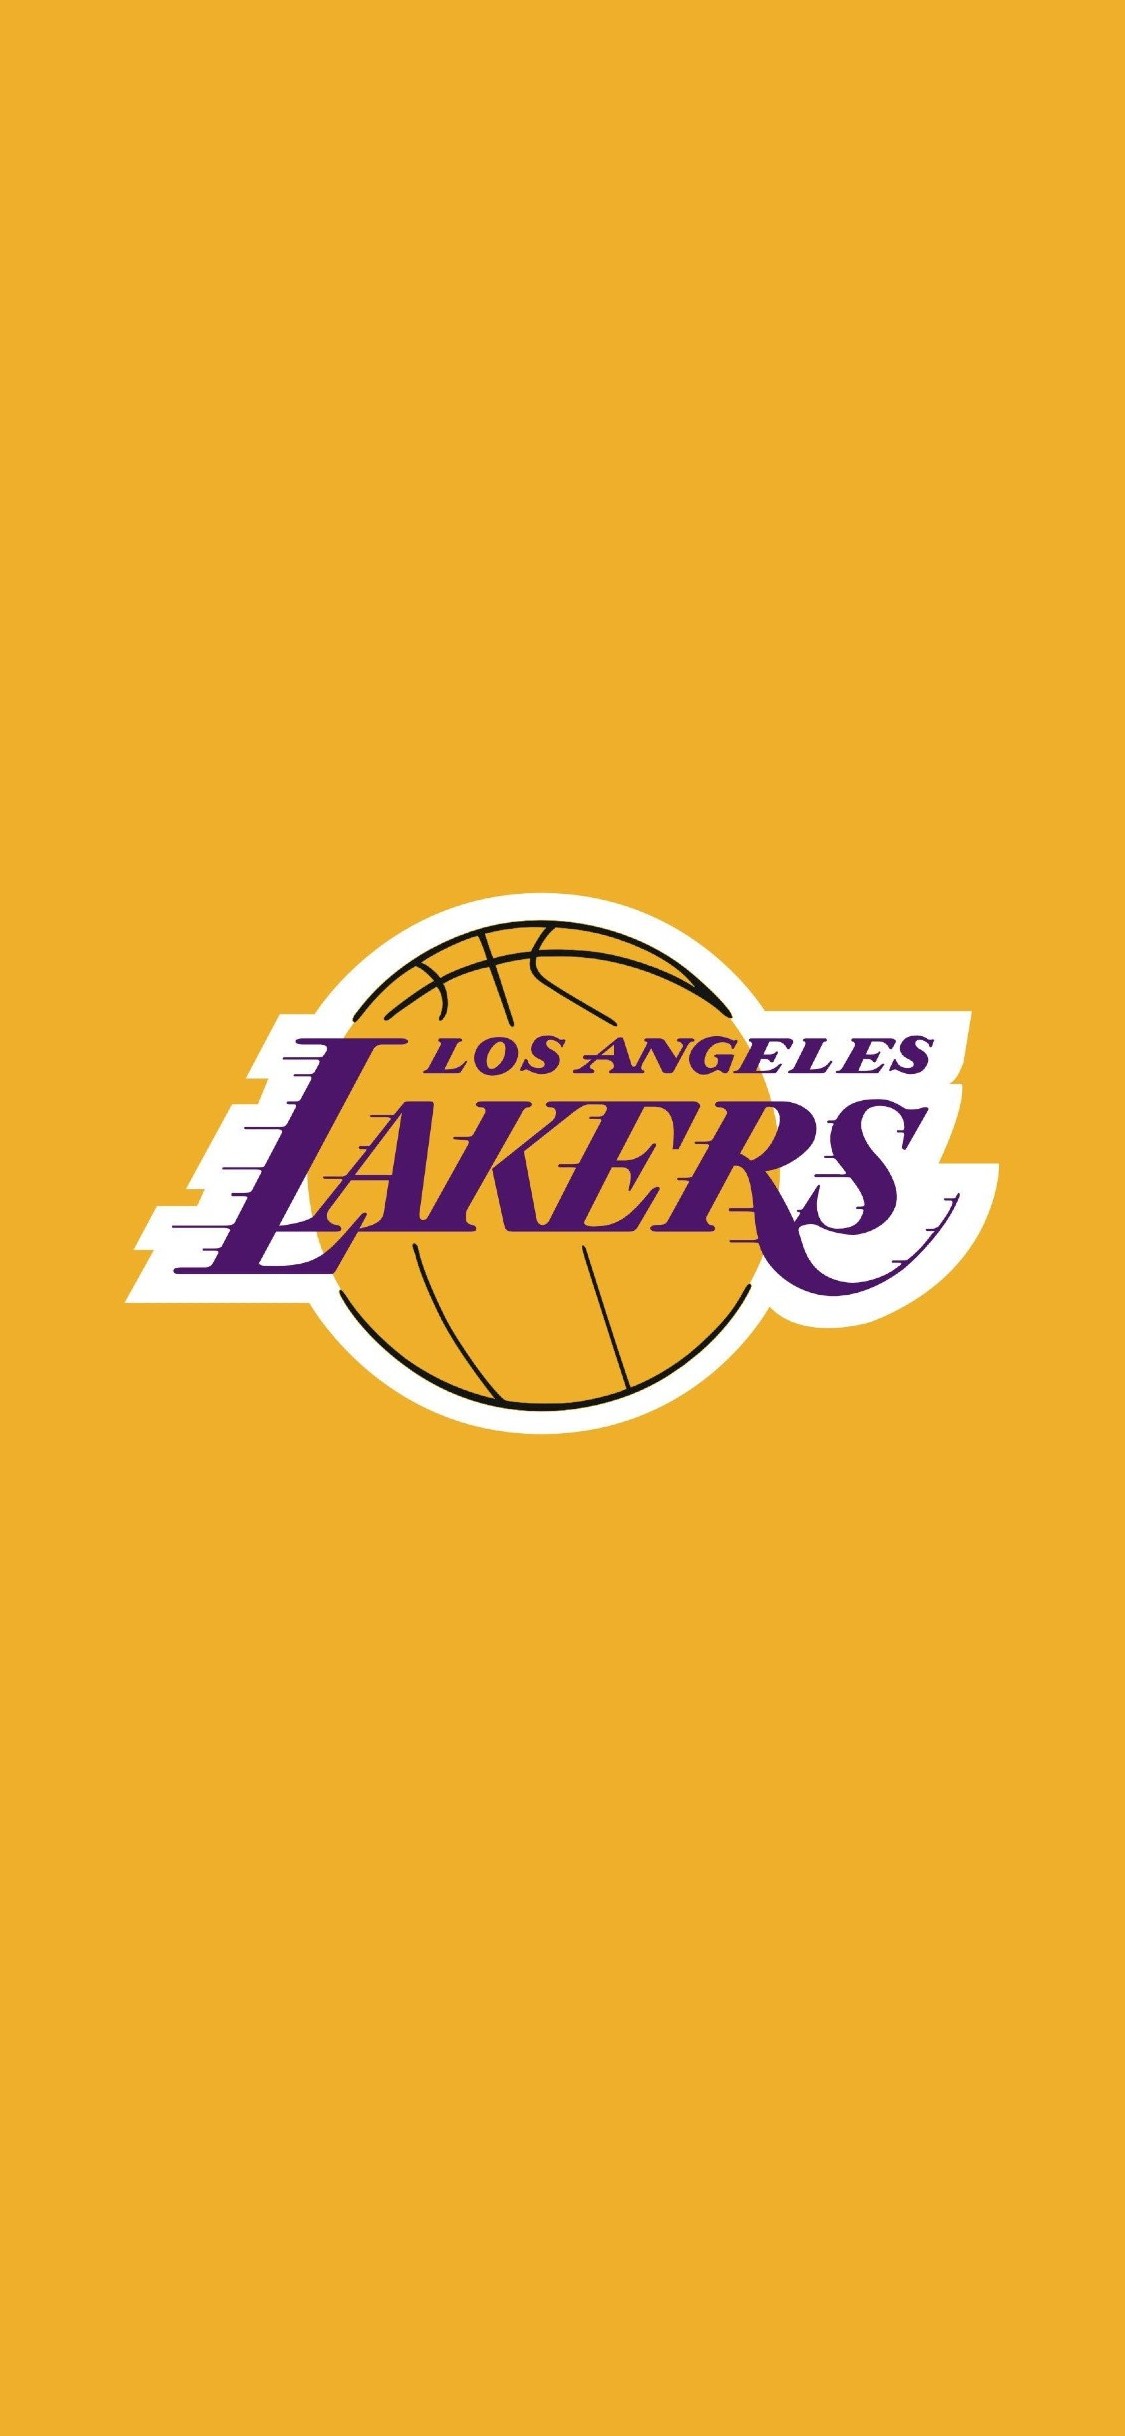 Los Angeles Lakers バスケ Iphone X 壁紙 待ち受け Sumaran